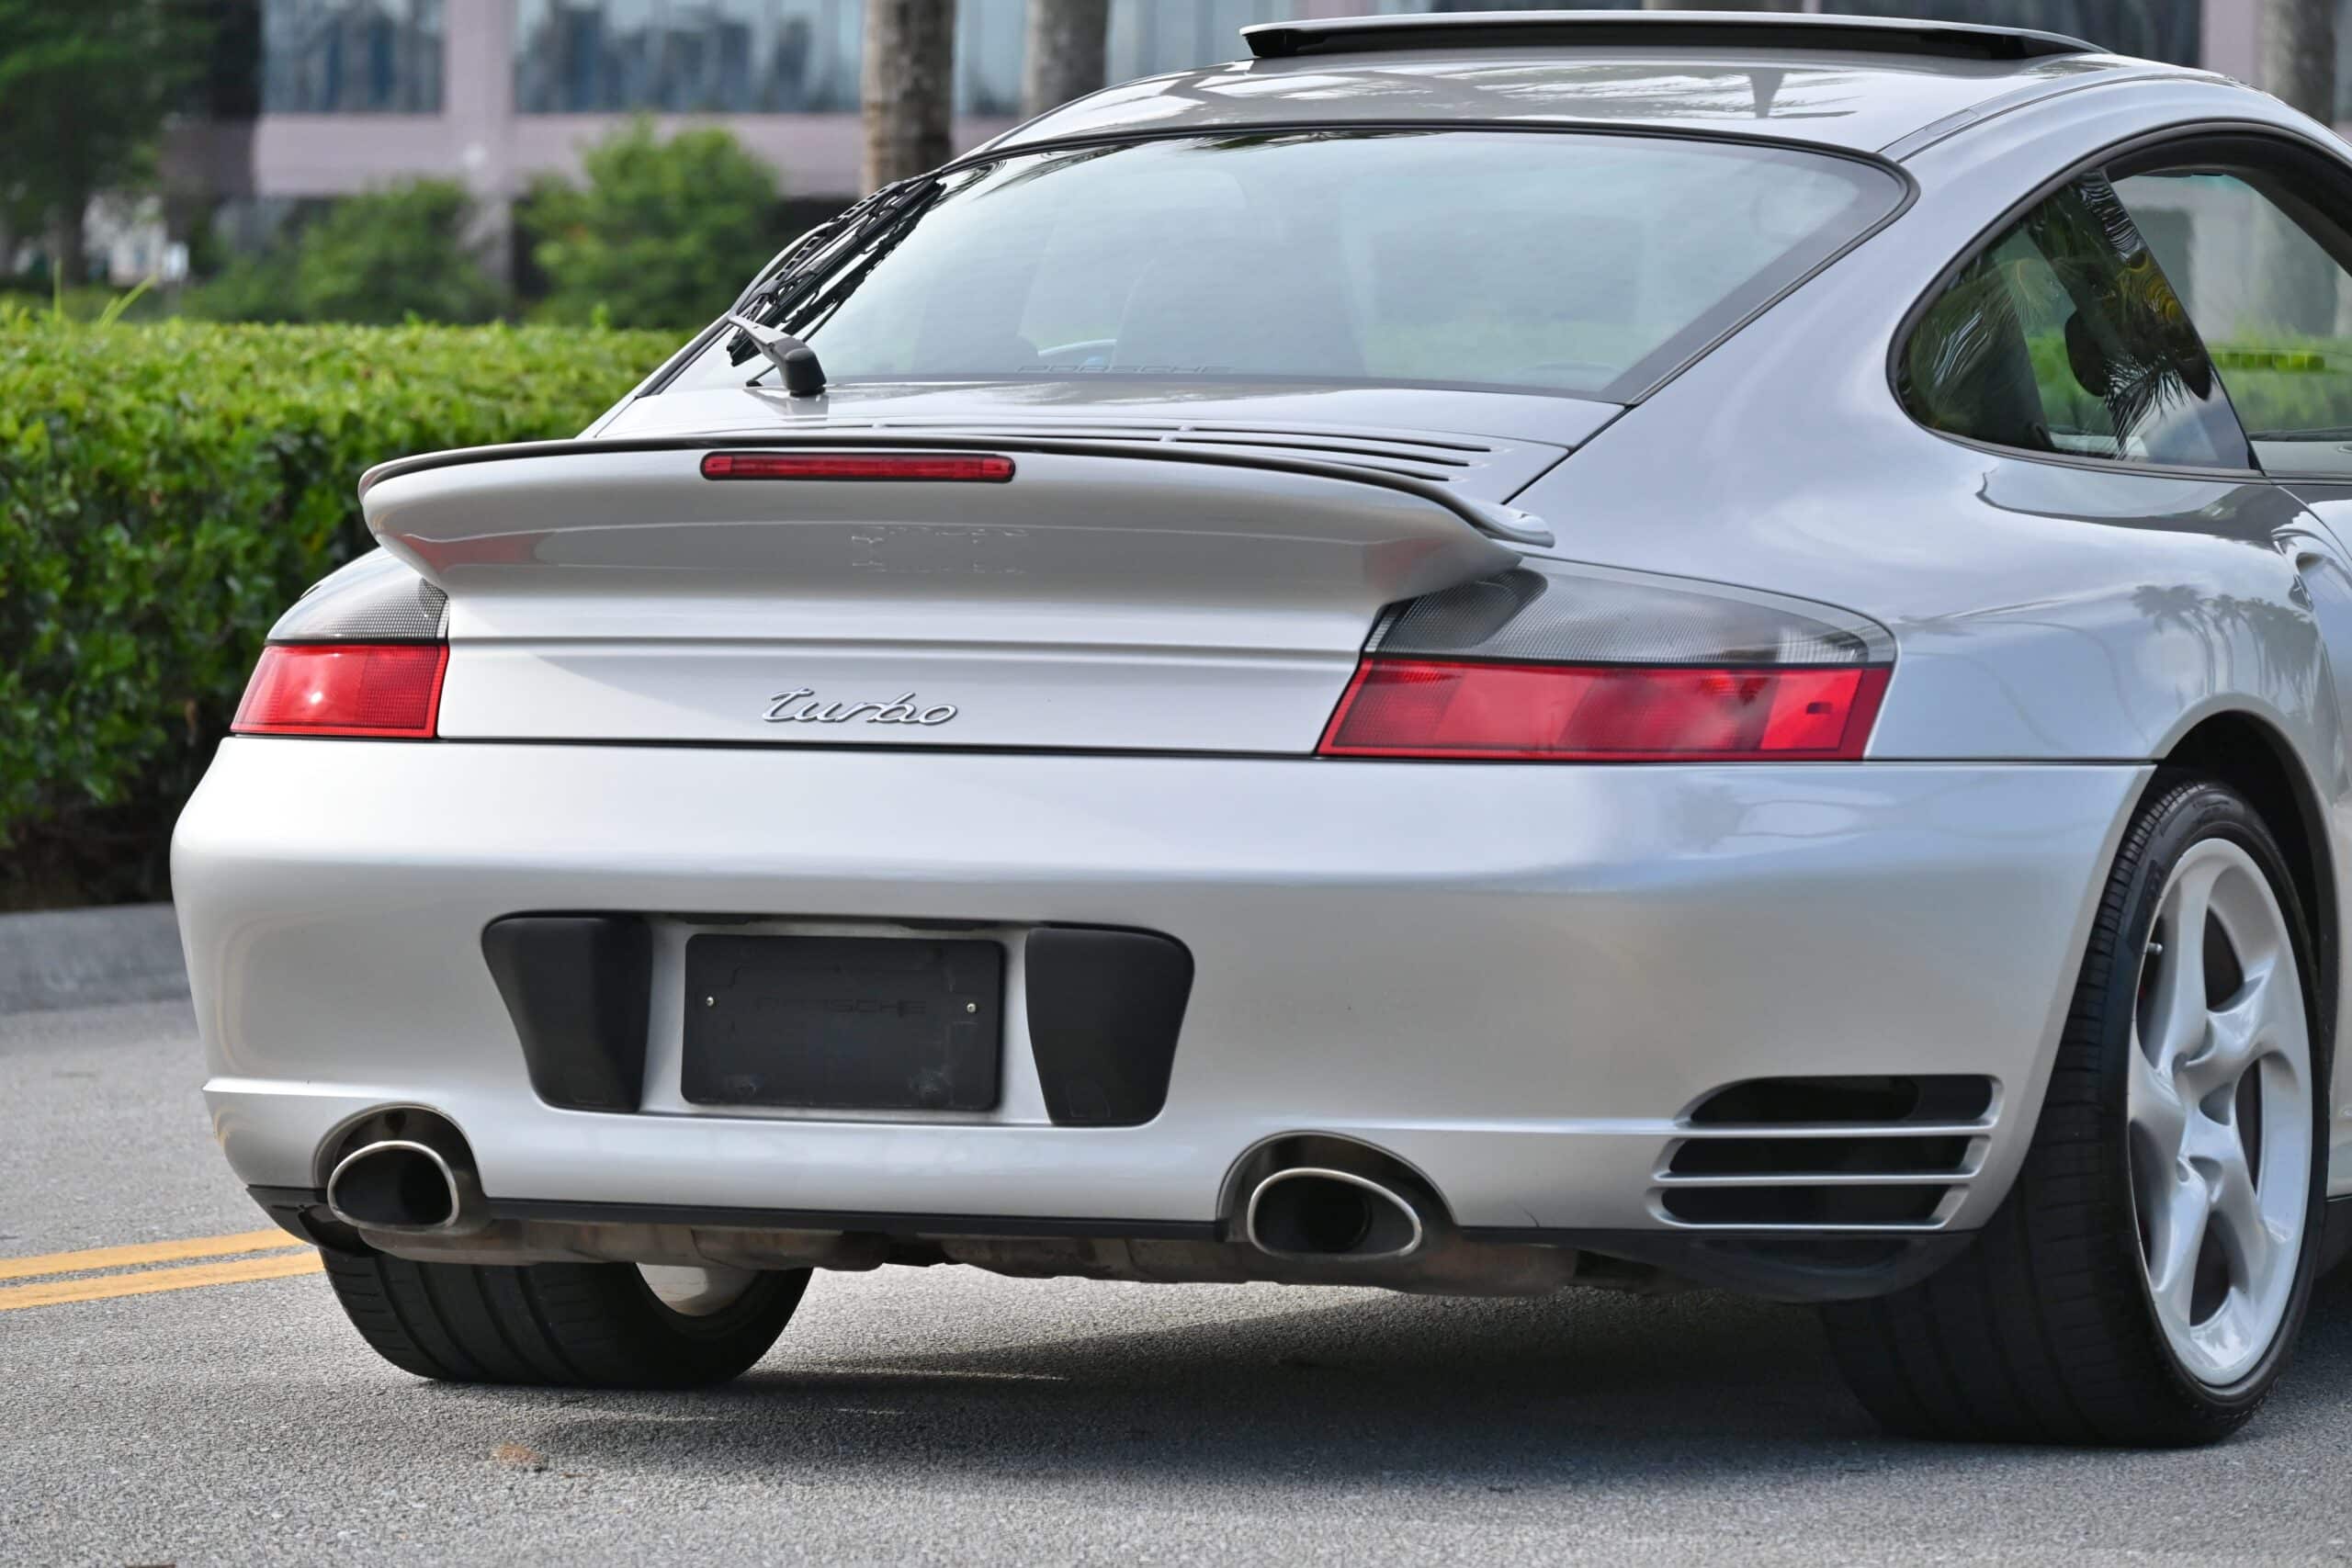 2002 Porsche 911 Turbo 996 1 Owner – 13k Actual Miles – Original Title – 100% Stock Unmodified – Texas Car